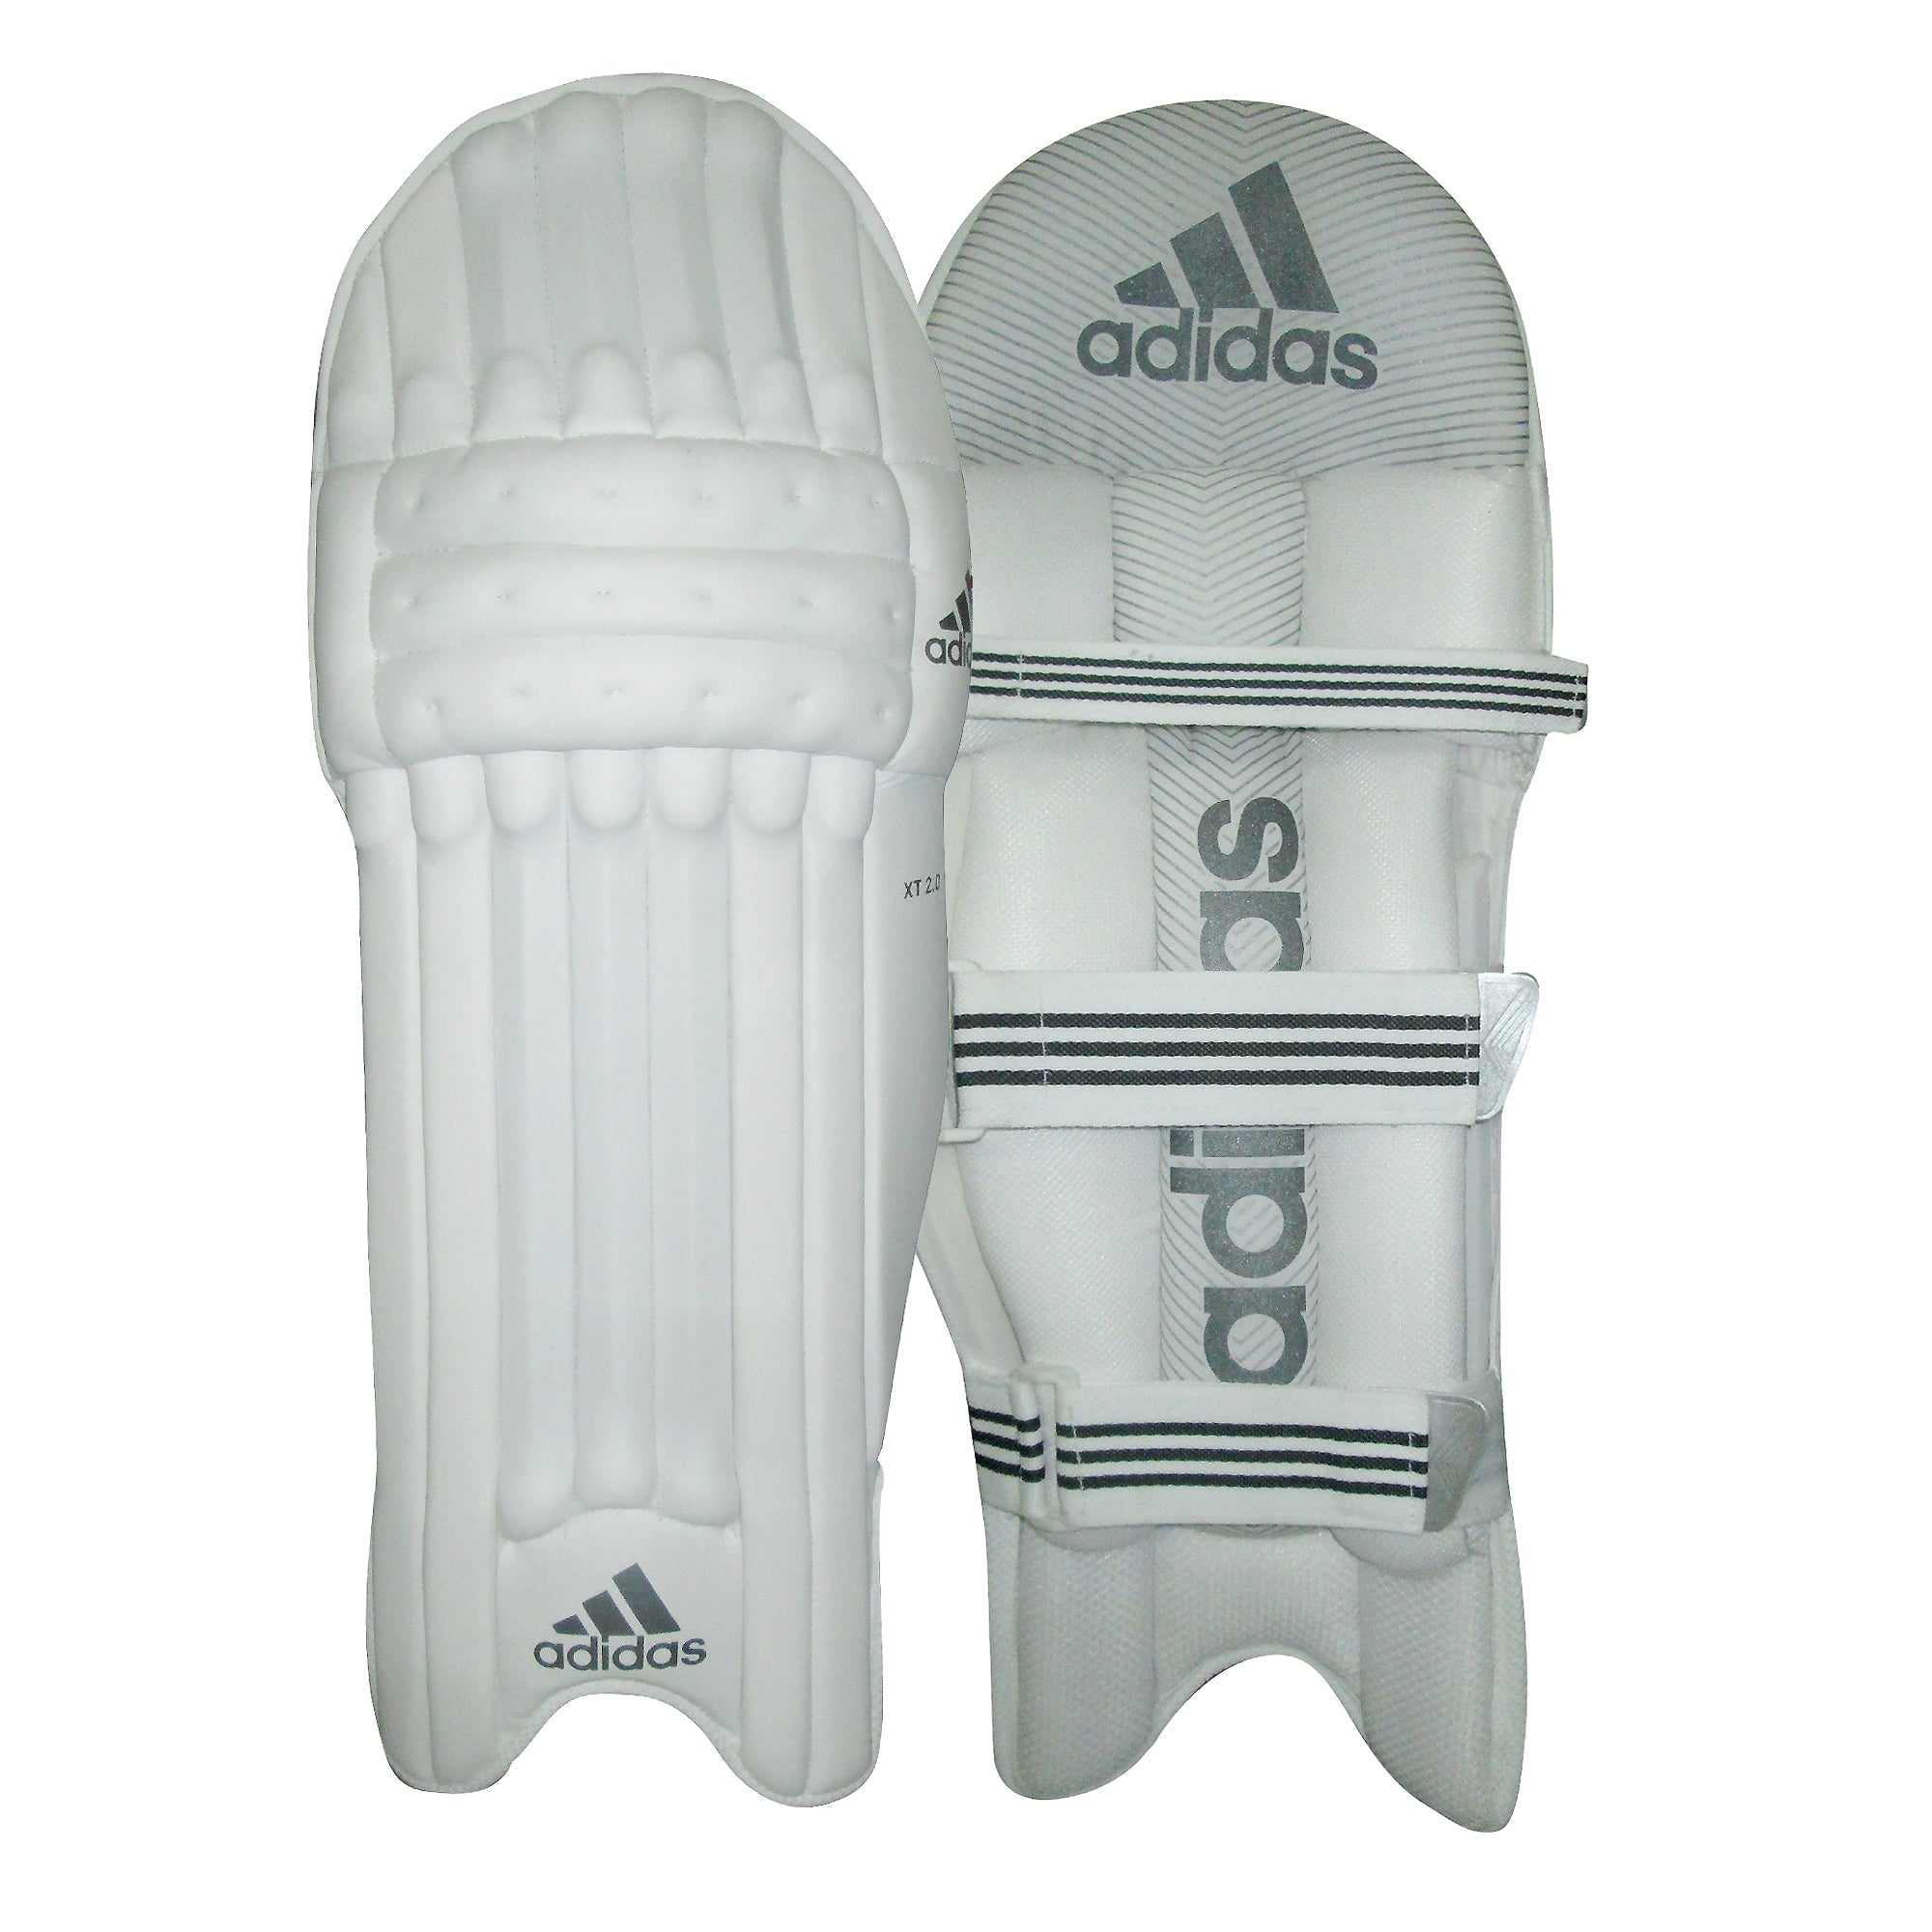 Adidas XT 2.0 Senior Cricket Batting Pads - Stagsports.co.au